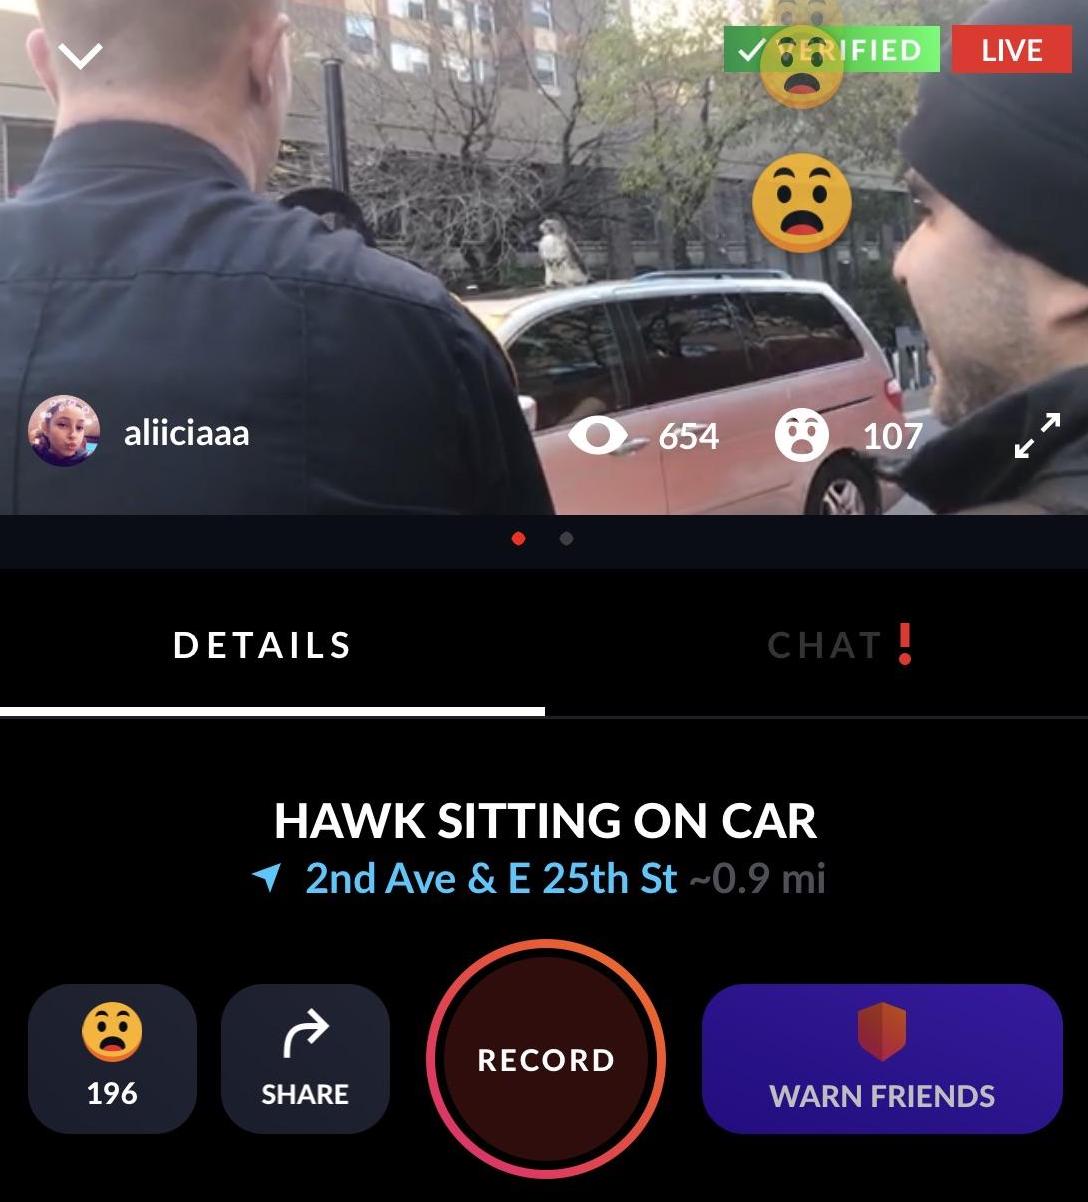 screenshot - Srified Live aliiciaaa 0654 107 Details Chat! Hawk Sitting On Car 1 2nd Ave & E 25th St ~0.9 mi Record 196 Warn Friends